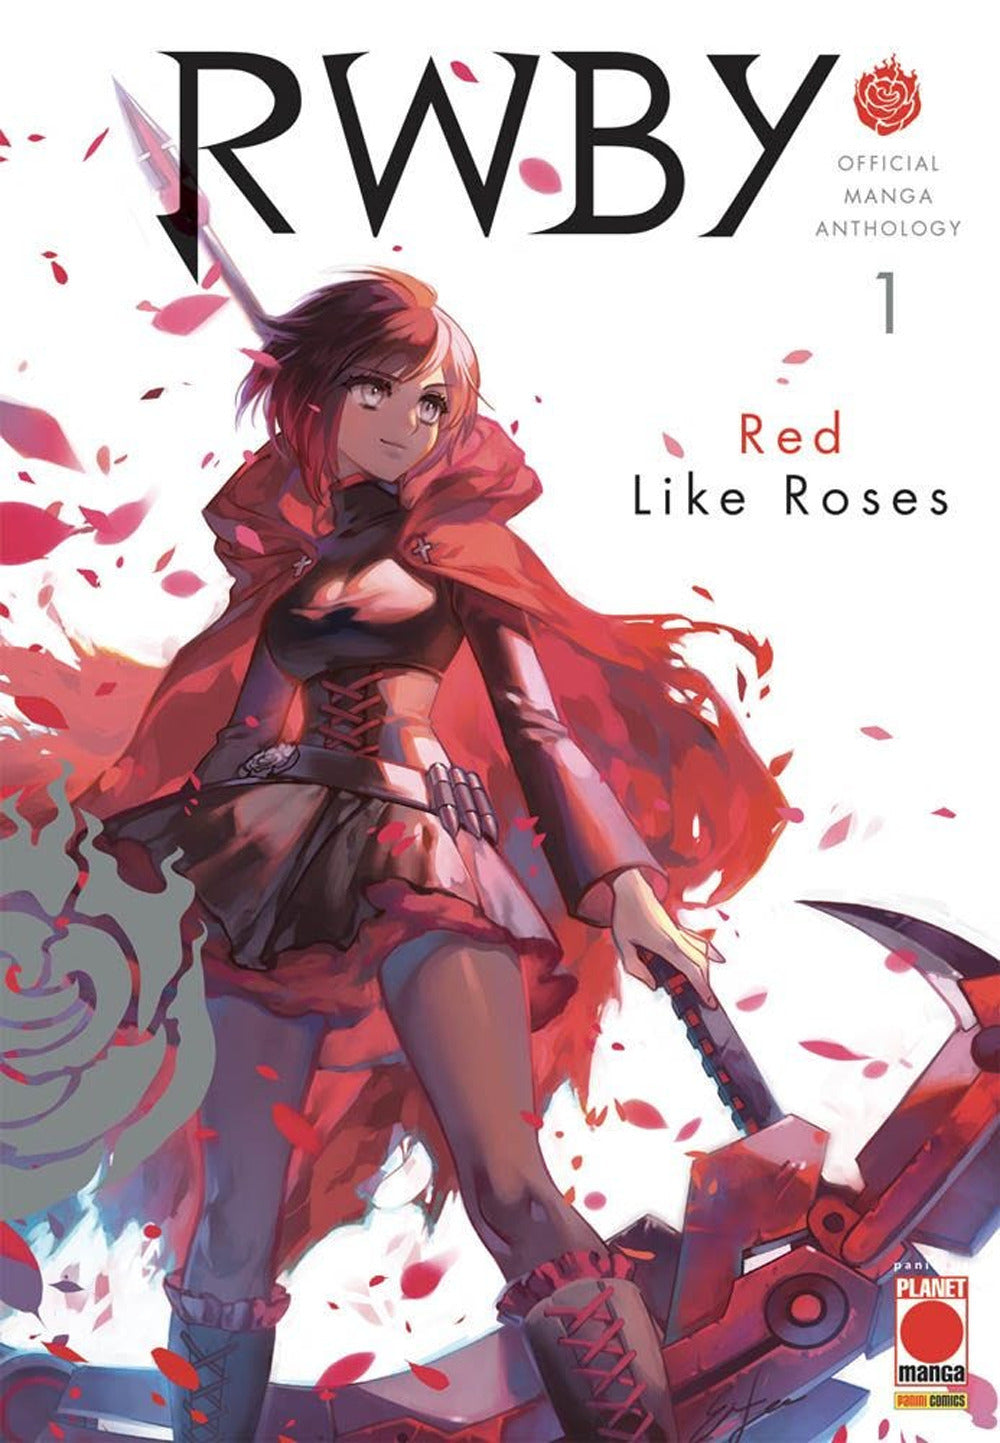 RWBY. Official manga anthology. Vol. 1: Red like roses.